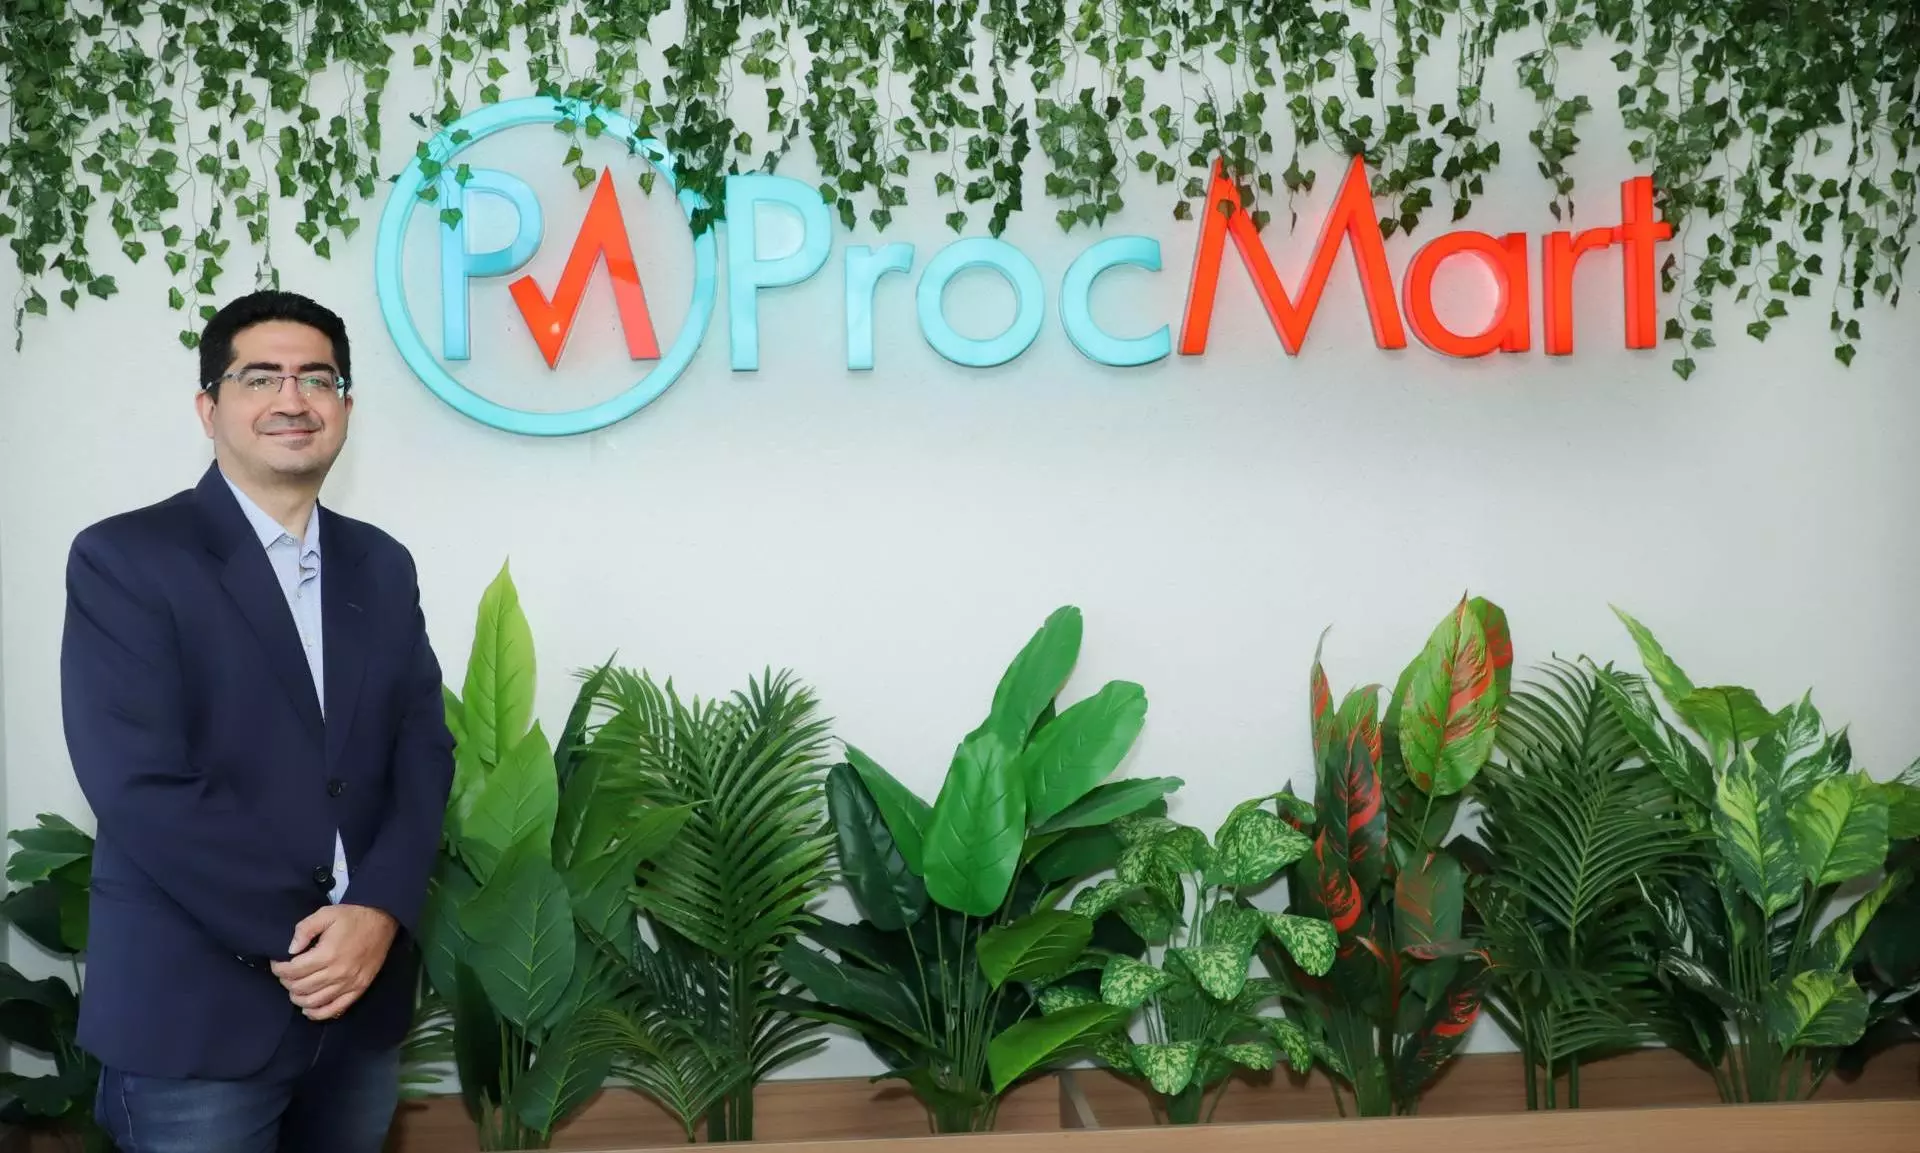 B2B procurement marketplace ProcMart raises $30 million in Series B